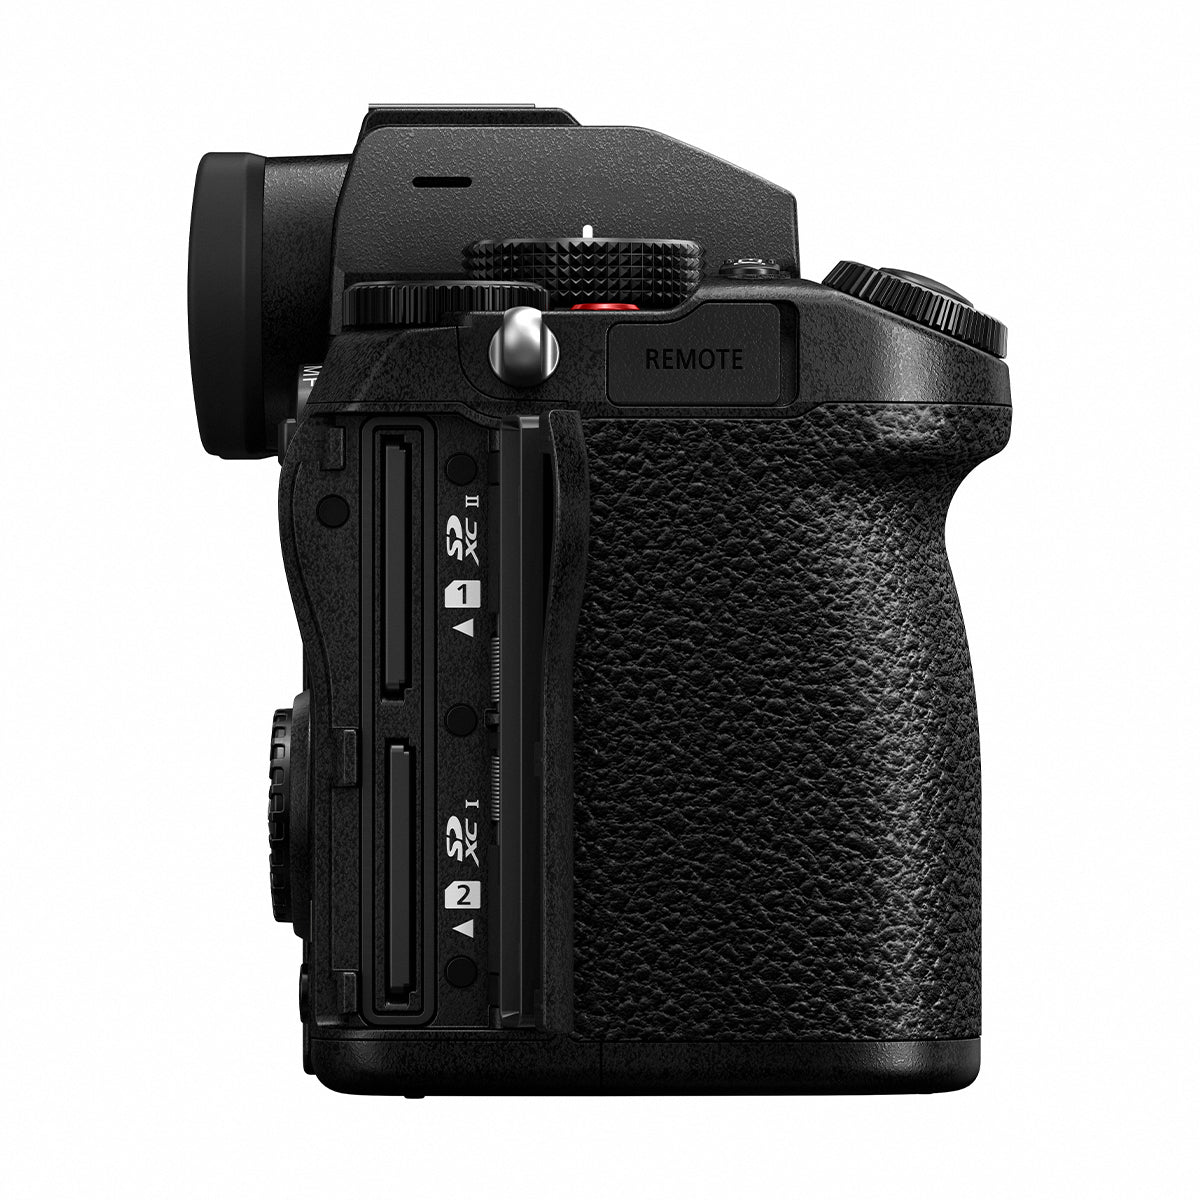 Panasonic Lumix S5 Full Frame Mirrorless Camera with Lumix S 20-60mm f/3.5-5.6 Lens